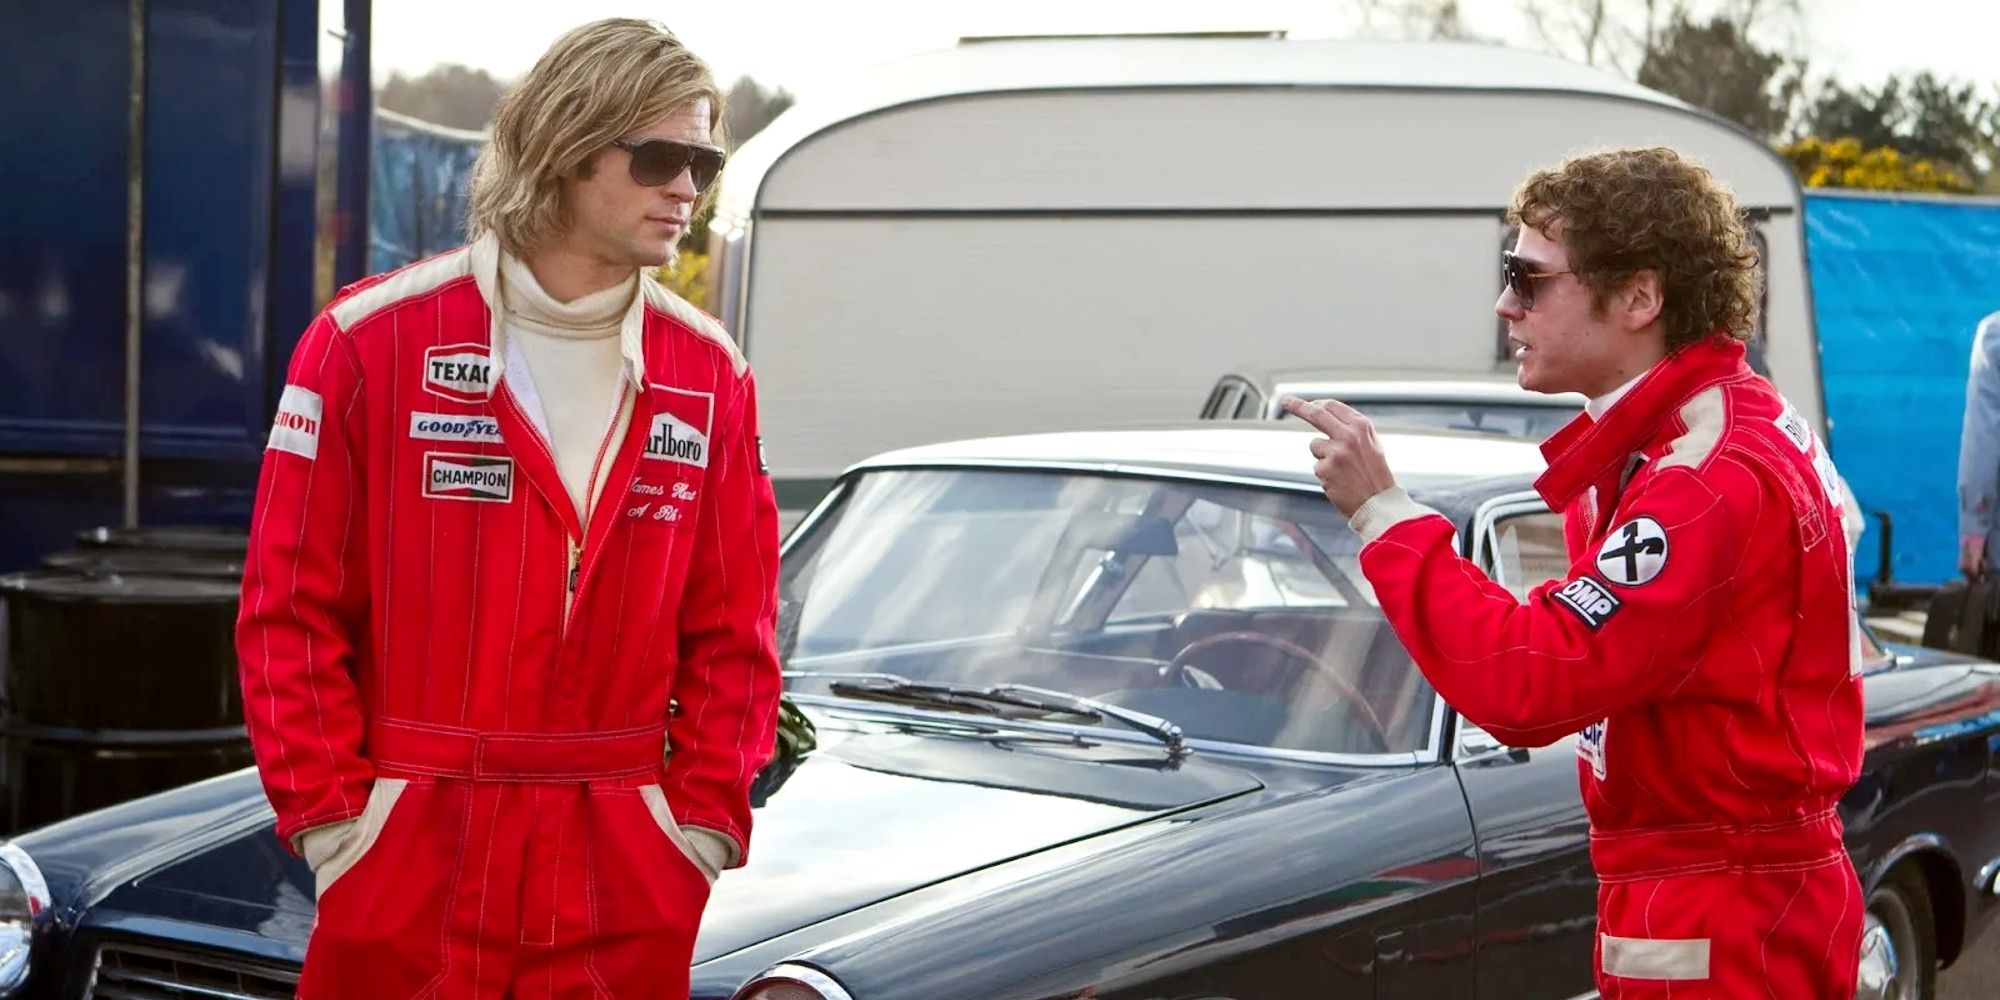 James Hunt and Niki Lauda discussing something